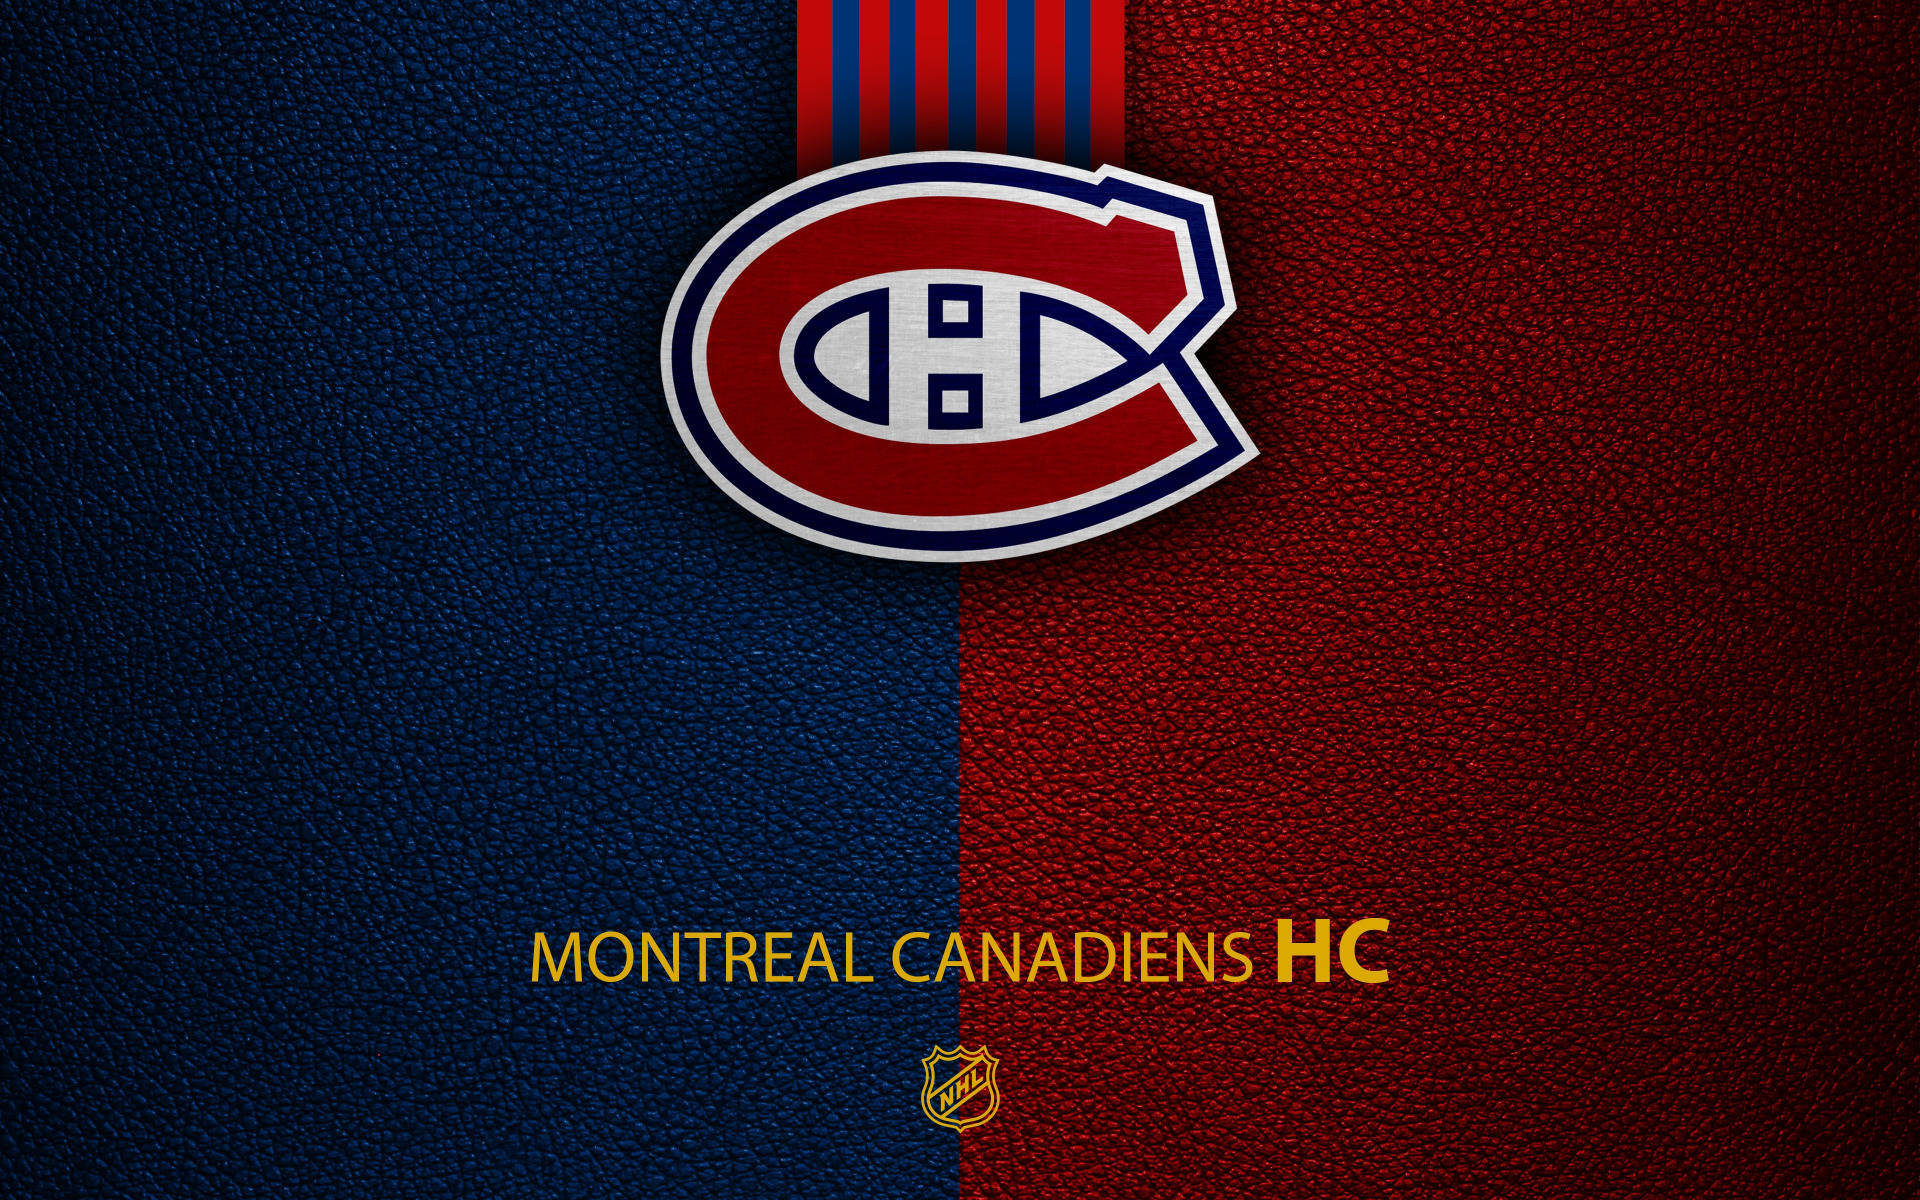 Ice Hockey Team Montreal Canadiens Wallpaper